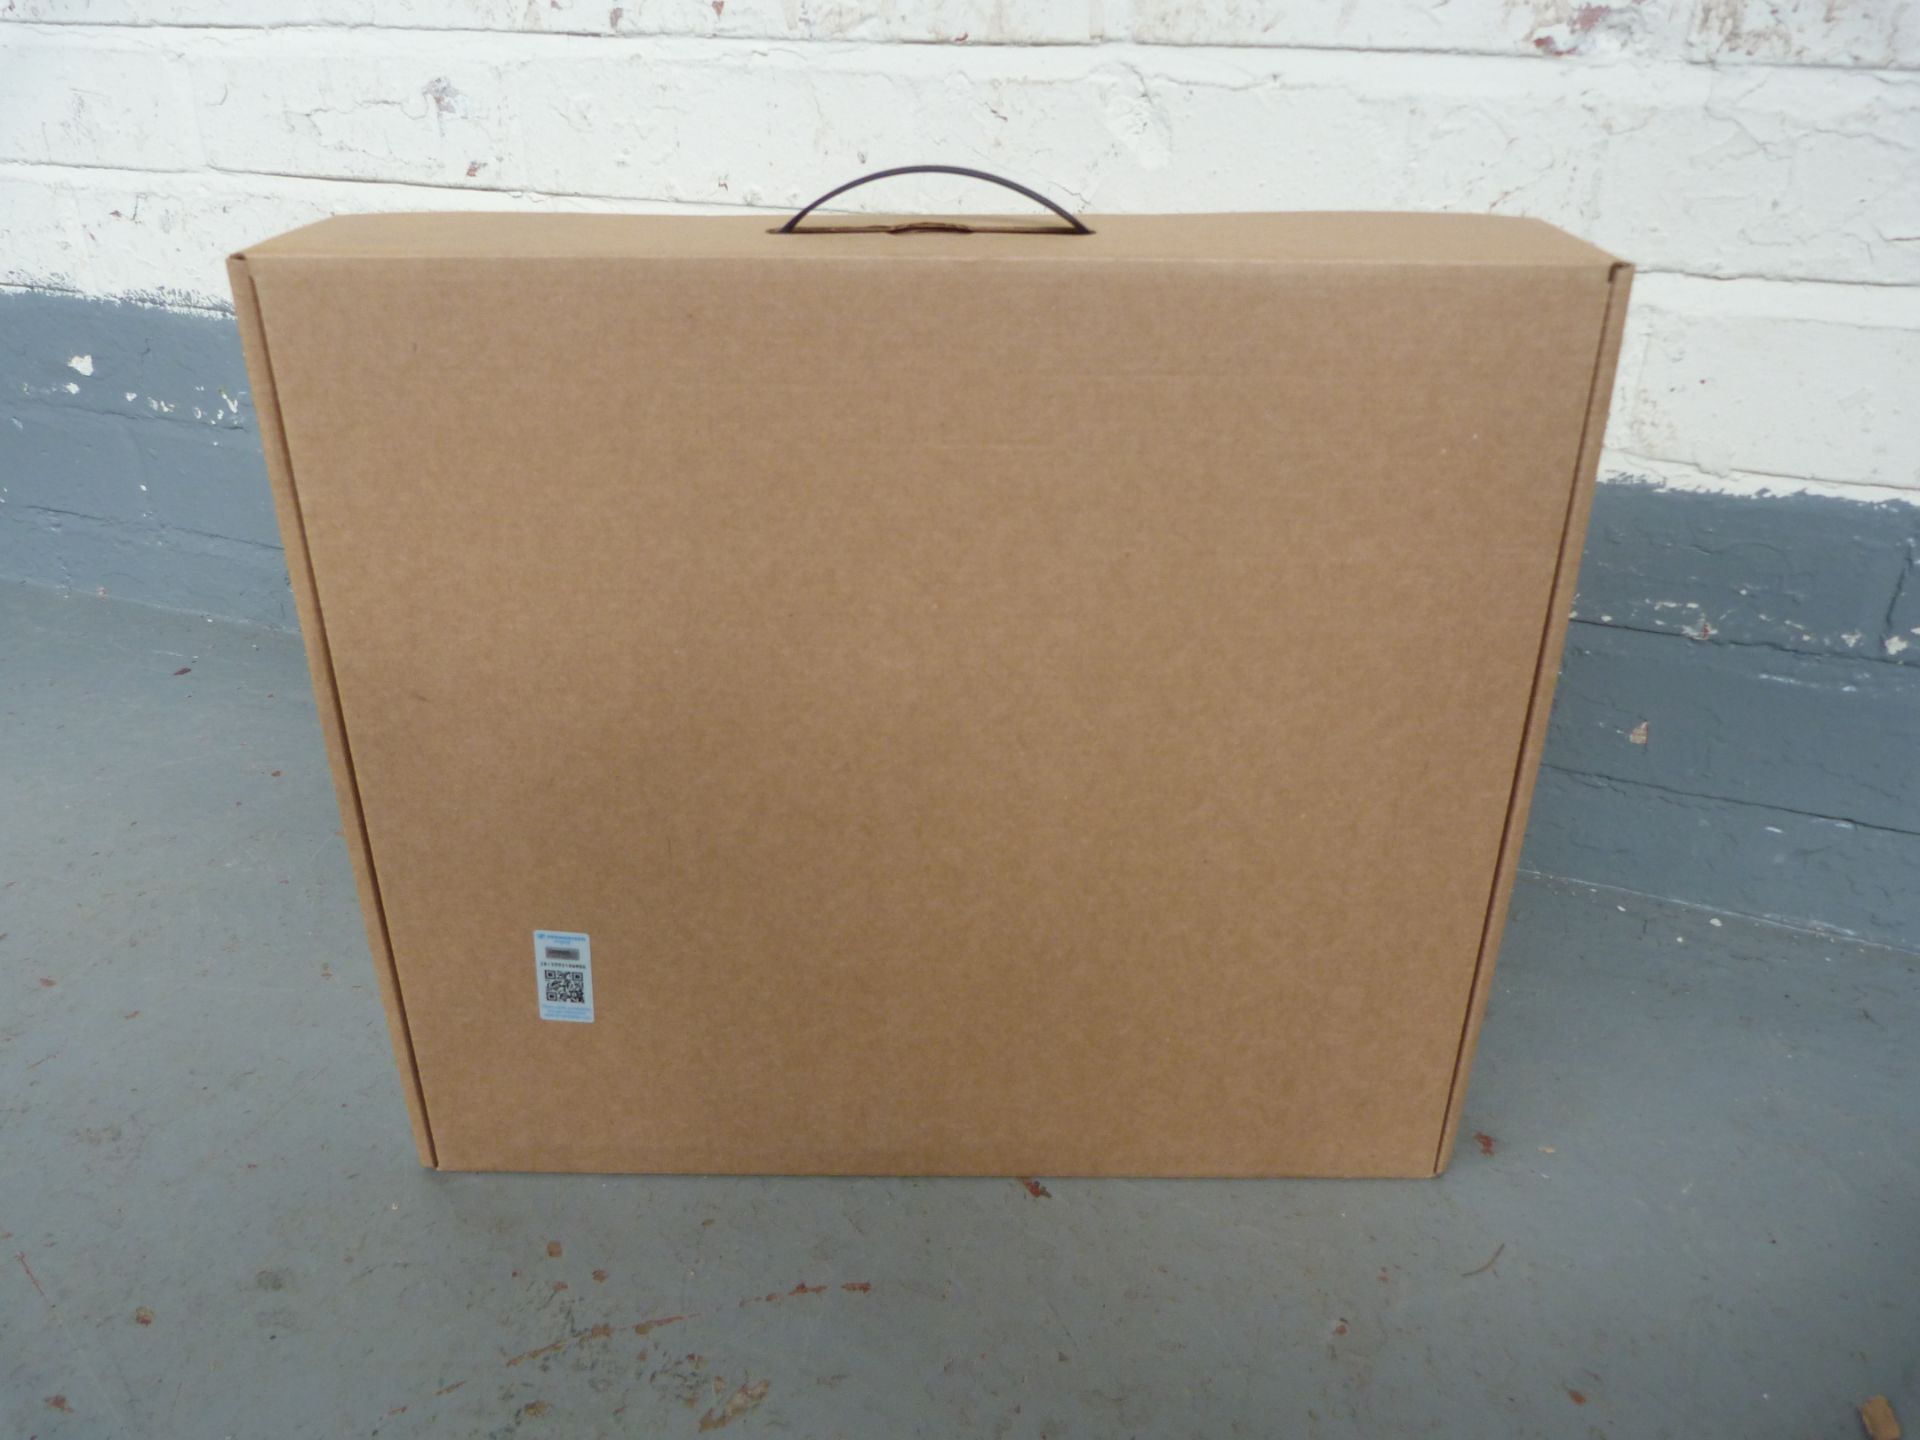 Sennheiser EW 300 G4-BASE SK-RC-GBW Bodypack Base Set 507696. In Cardboard. Serial No: 8178661169 - Image 5 of 5